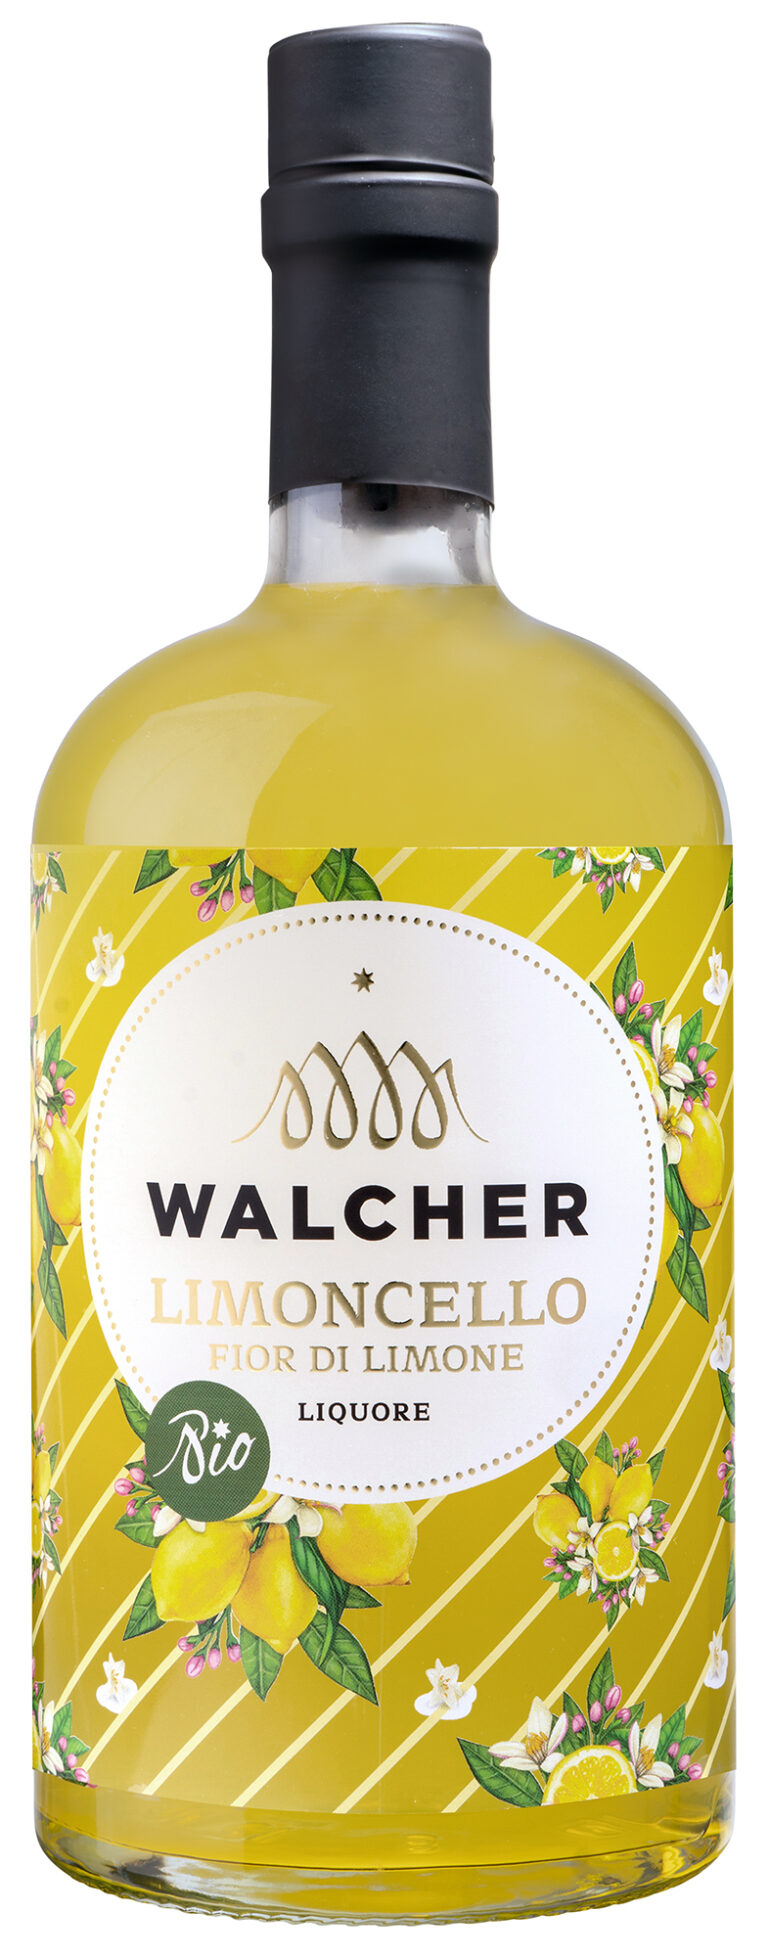 Billede af Limoncello - Limoncello Fior di Limone 15% Øko Walcher